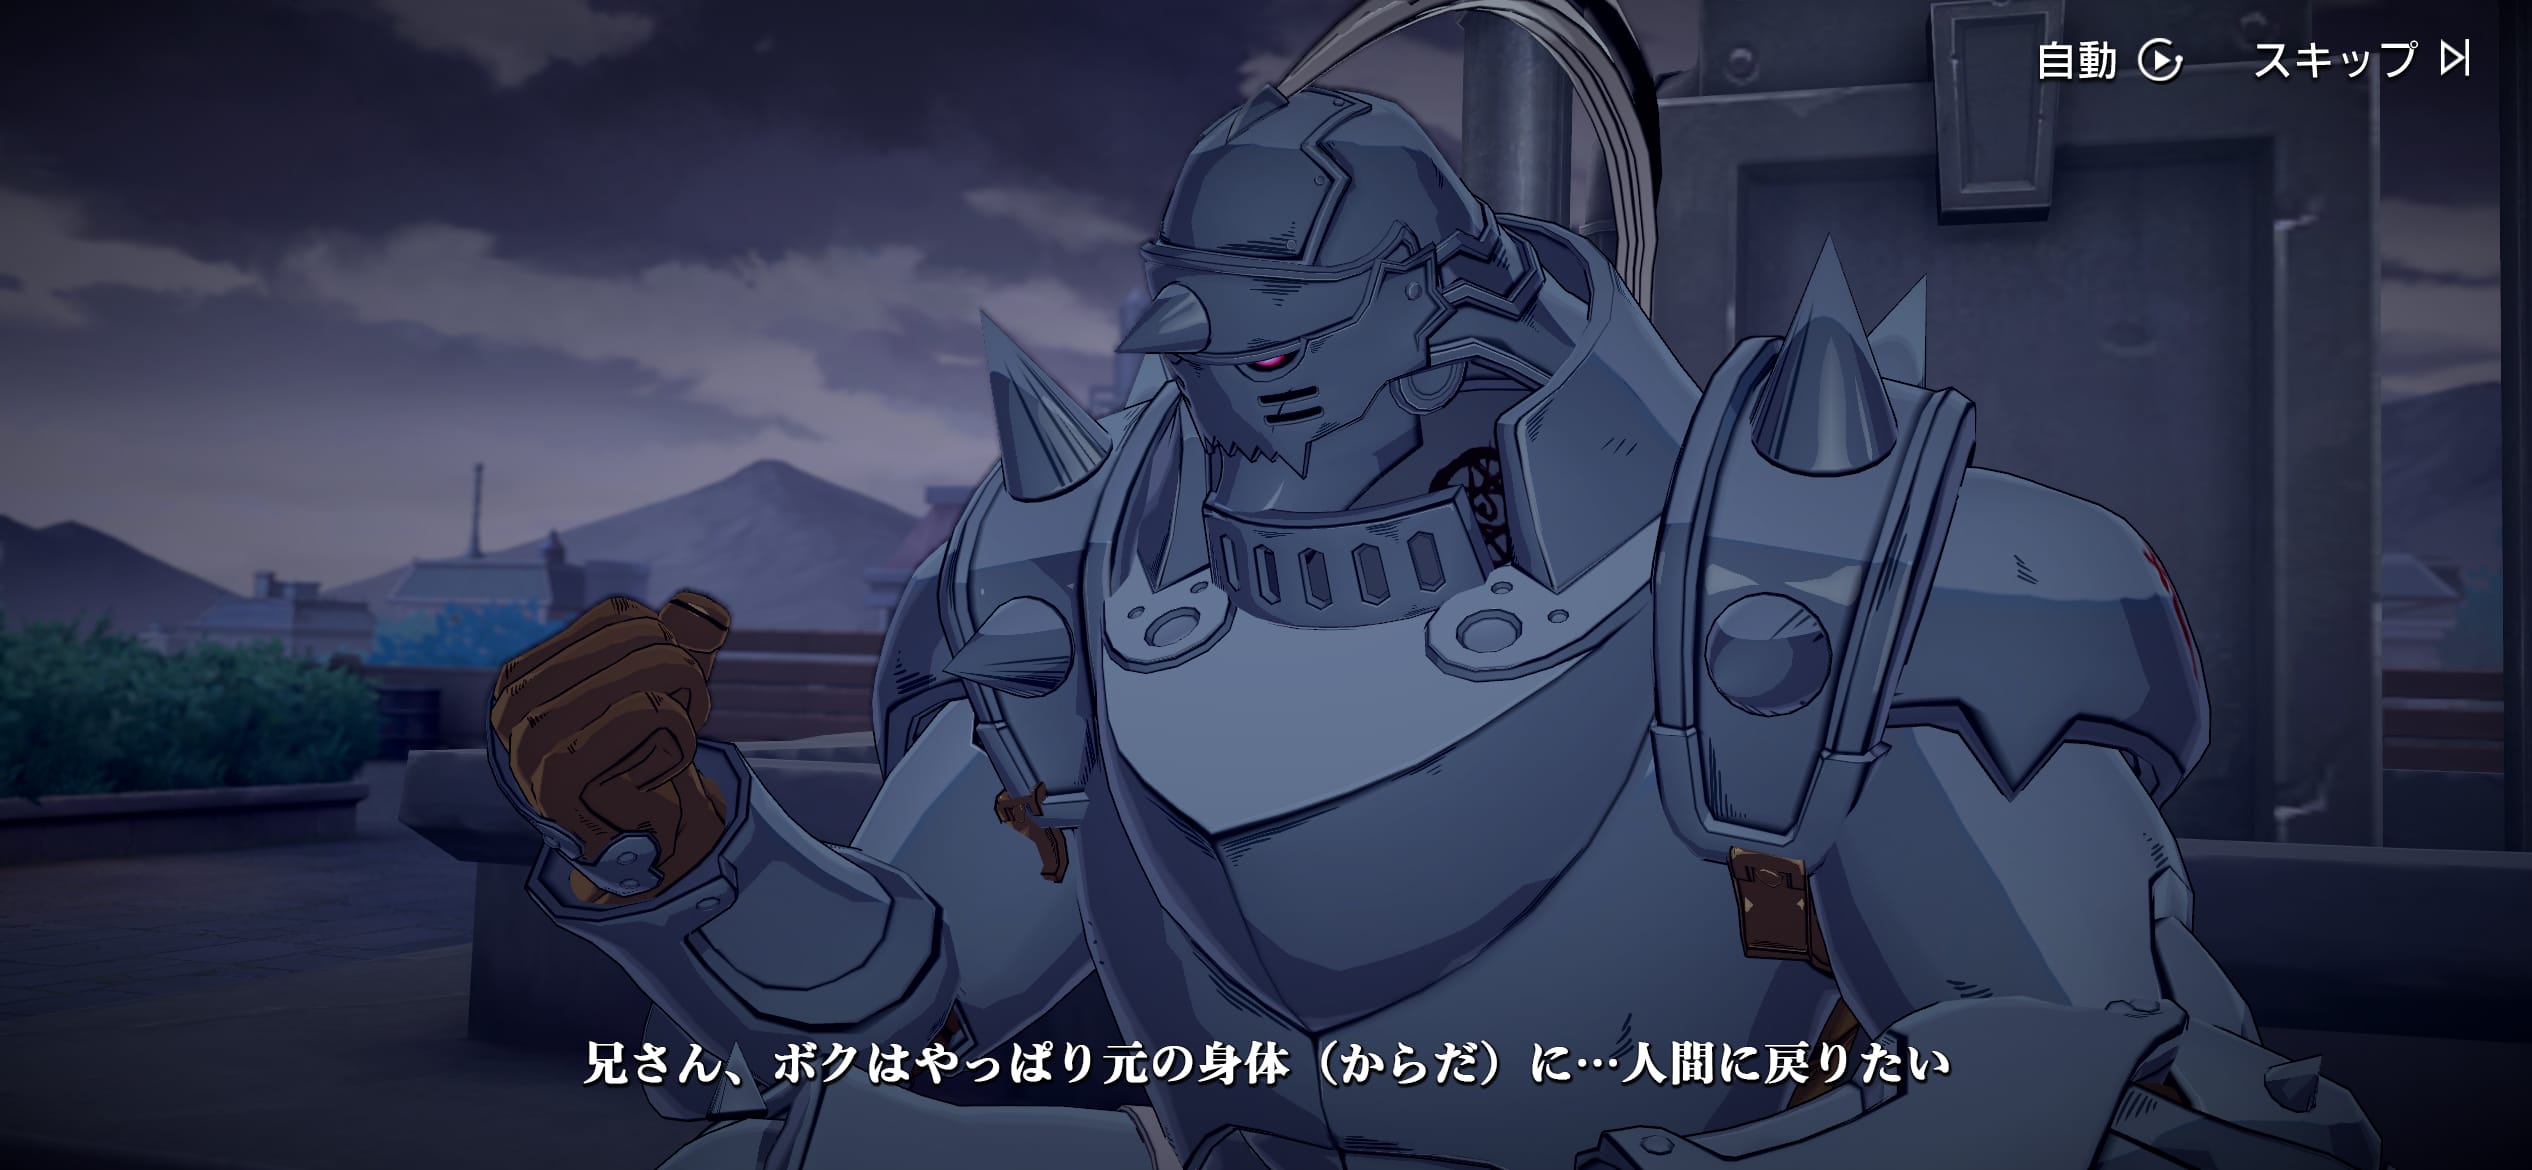 Fullmetal Alchemist' Mobile Game Receives New Trailer